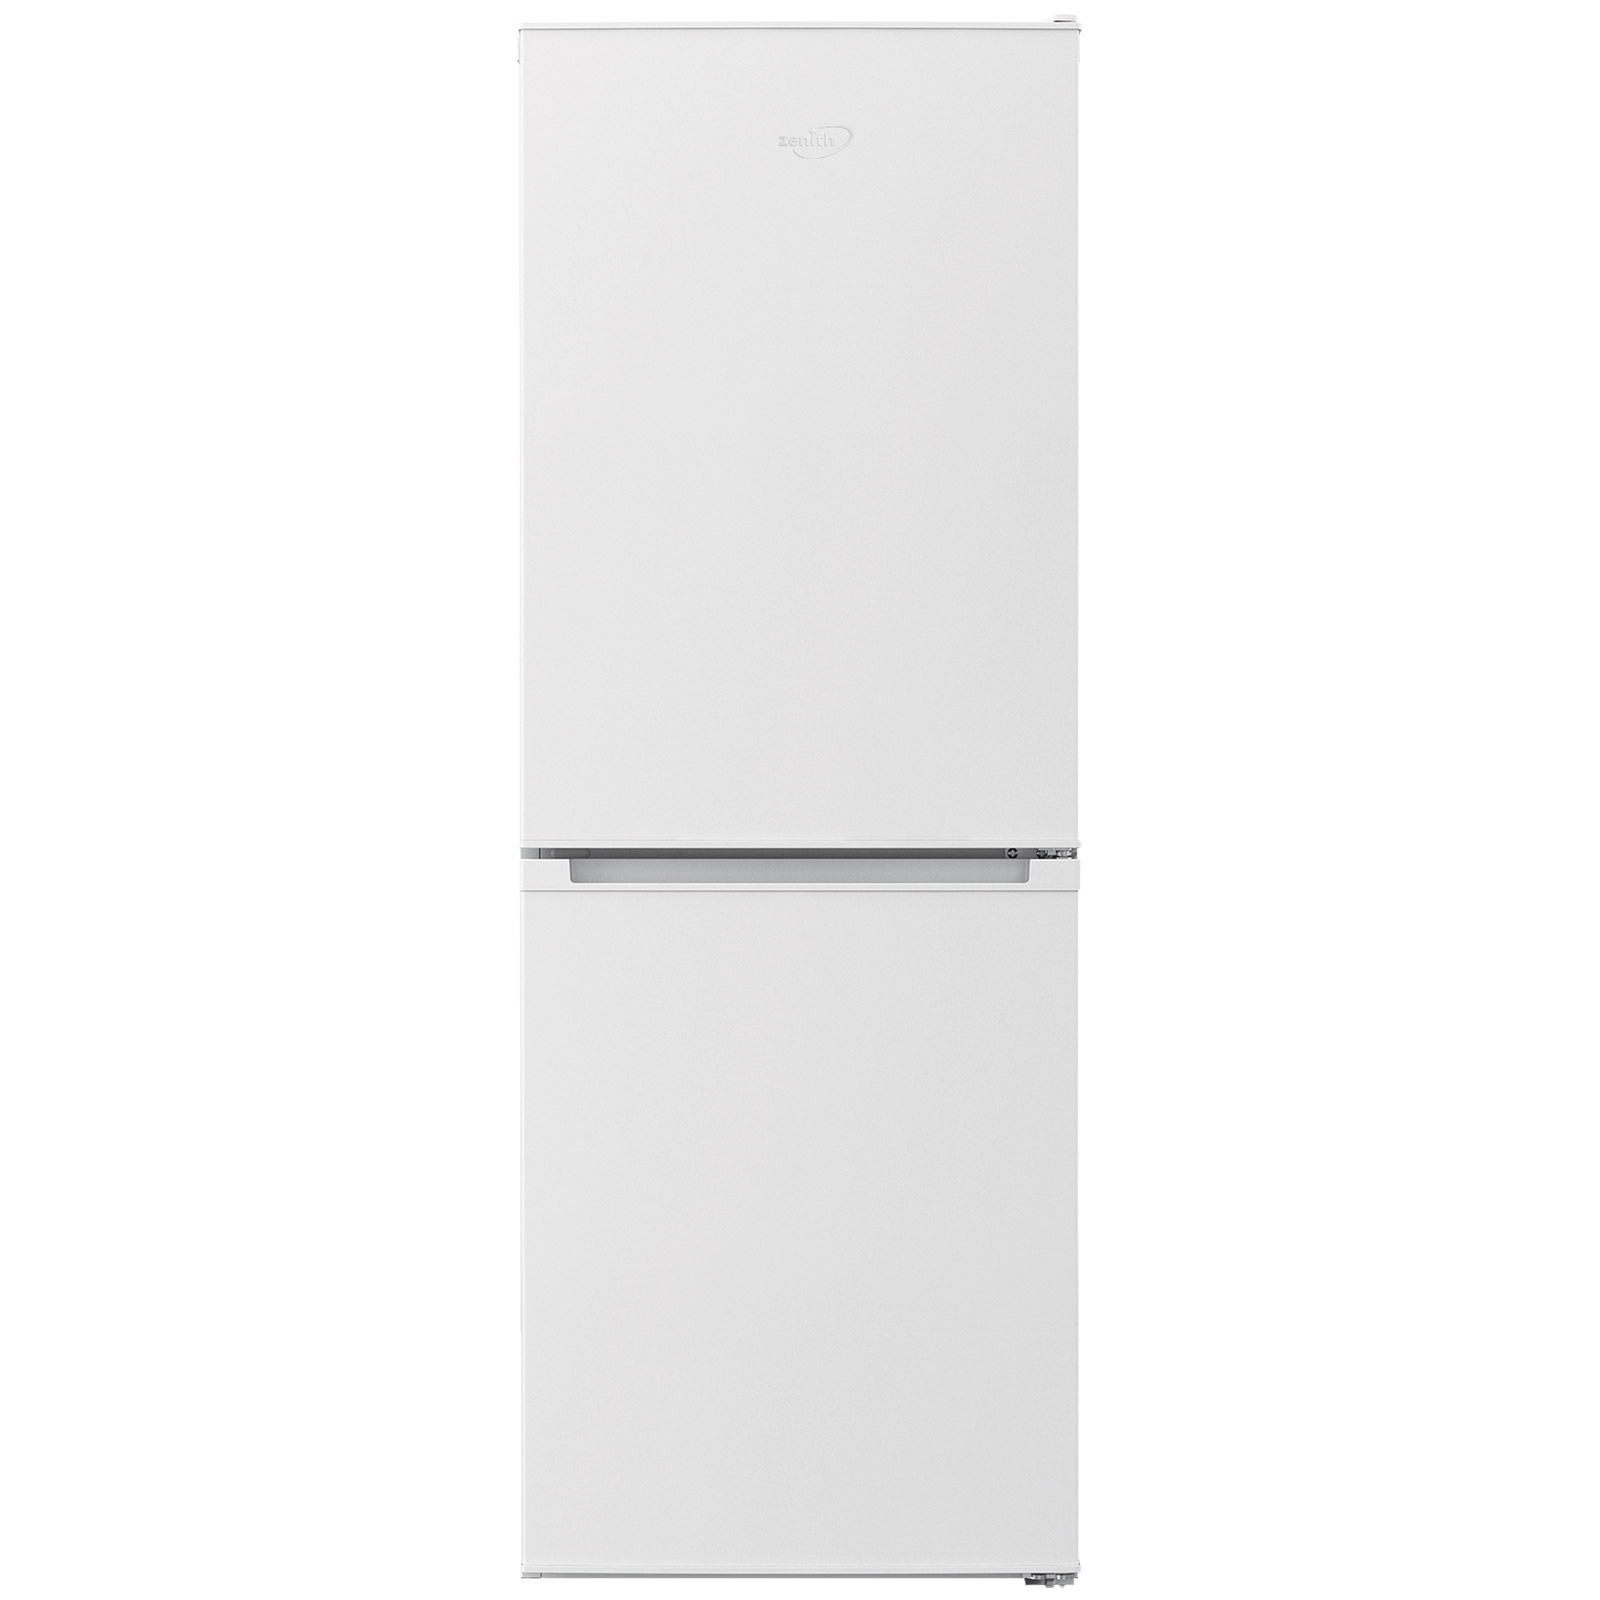 Zenith ZCS3552W 55cm Fridge Freezer in White 1 53m F Rated 142L 87L